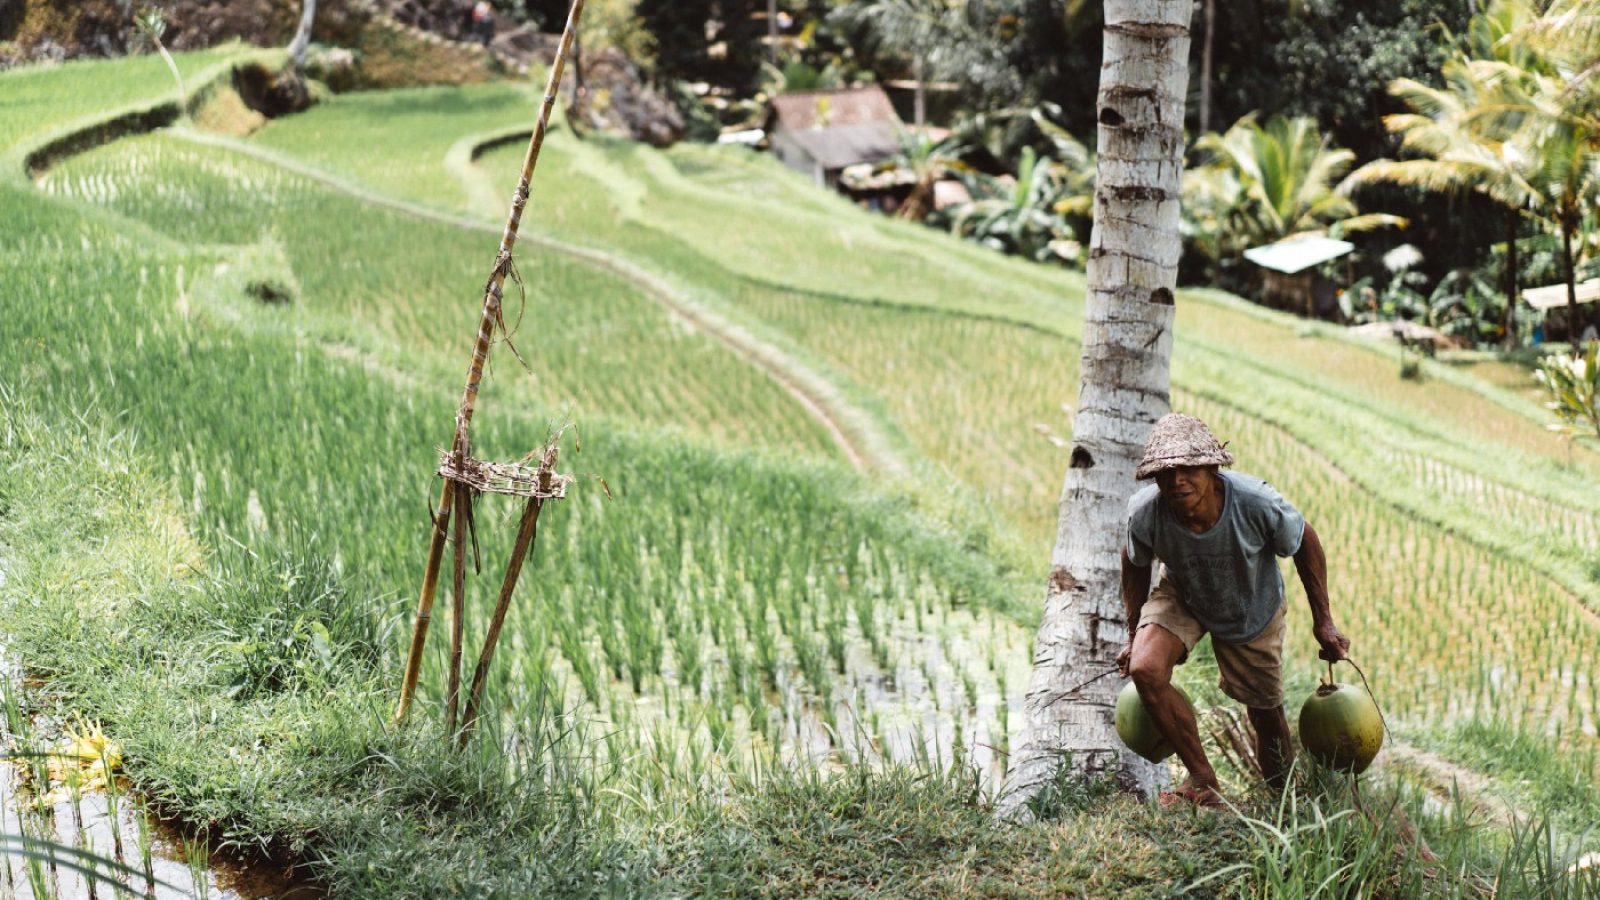 A smallholder farmer in a rice field